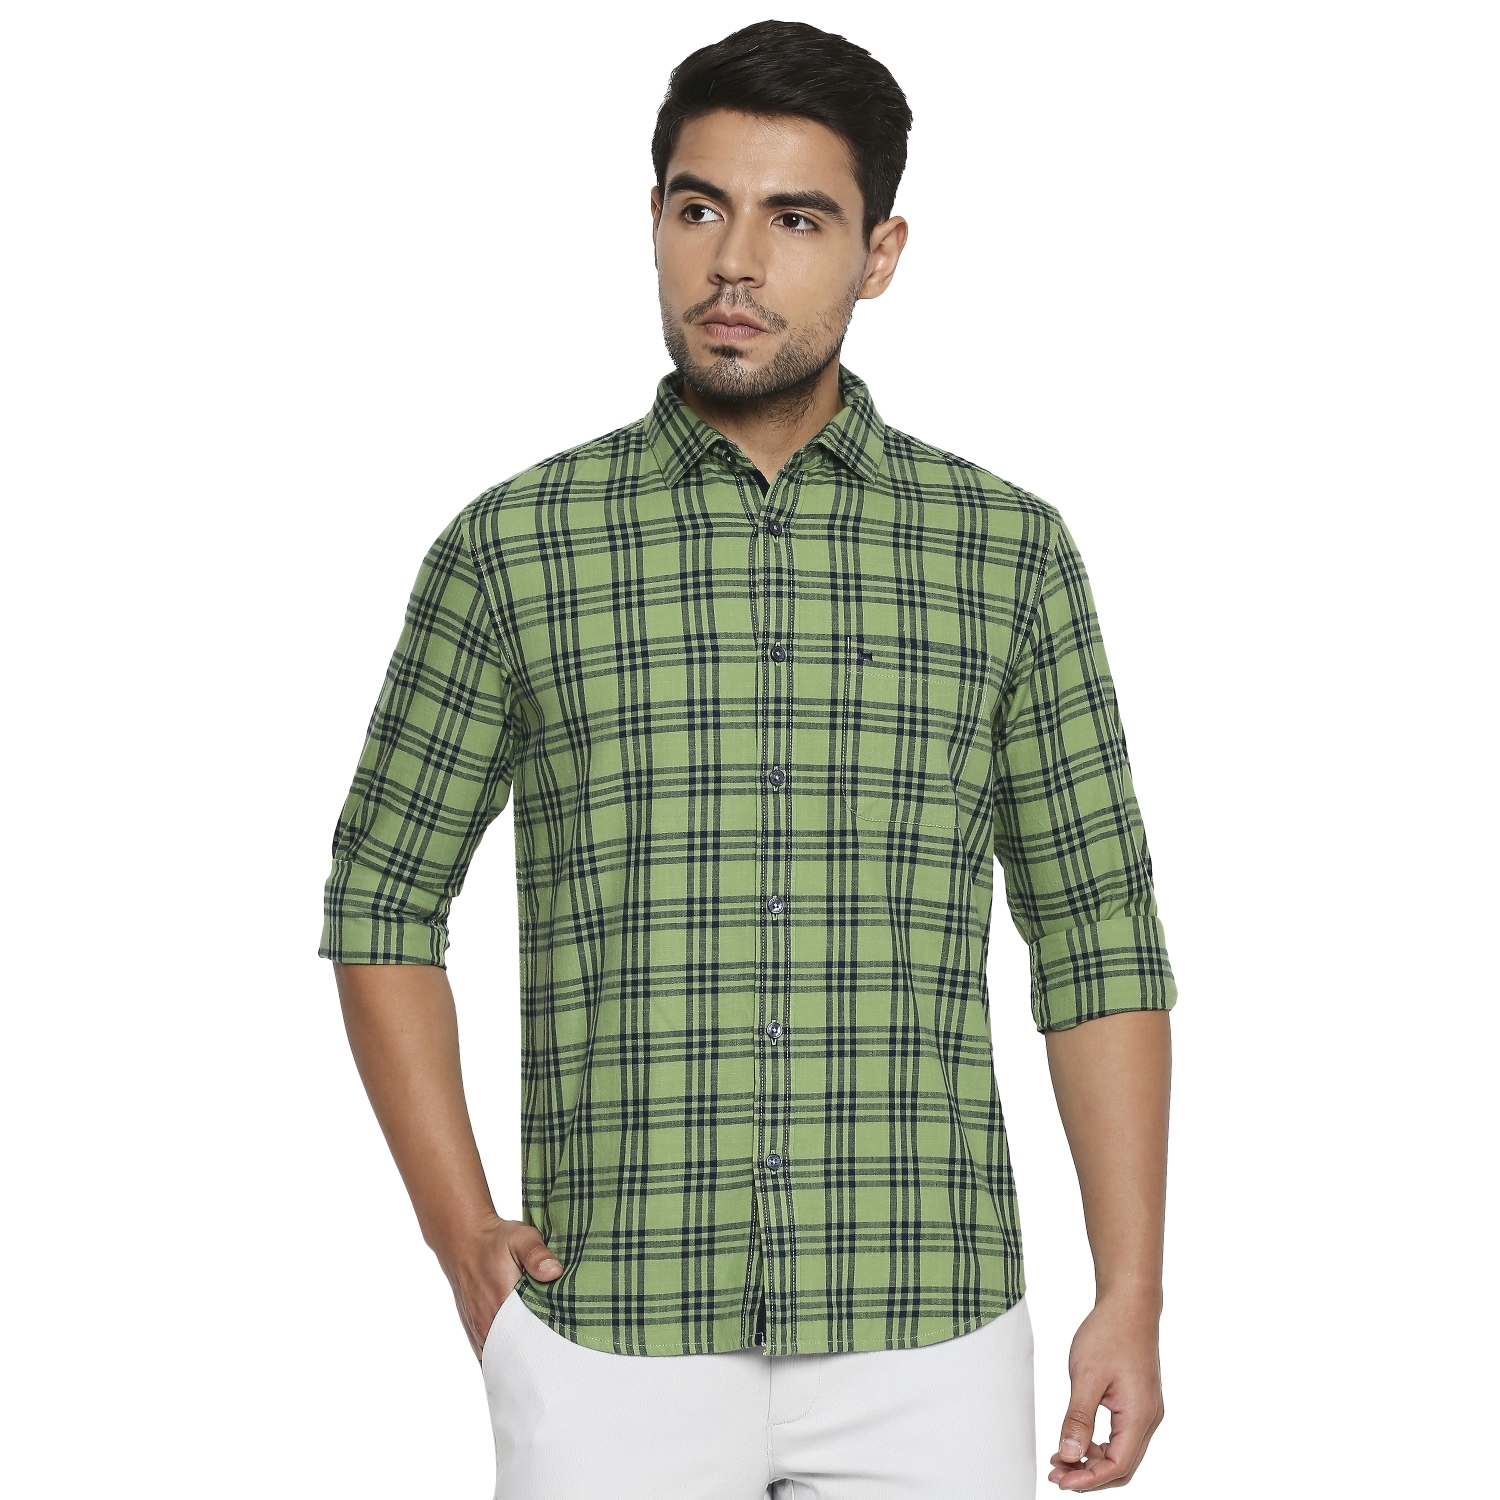 Basics | Basics Slim Fit Forest Green Checks Shirt